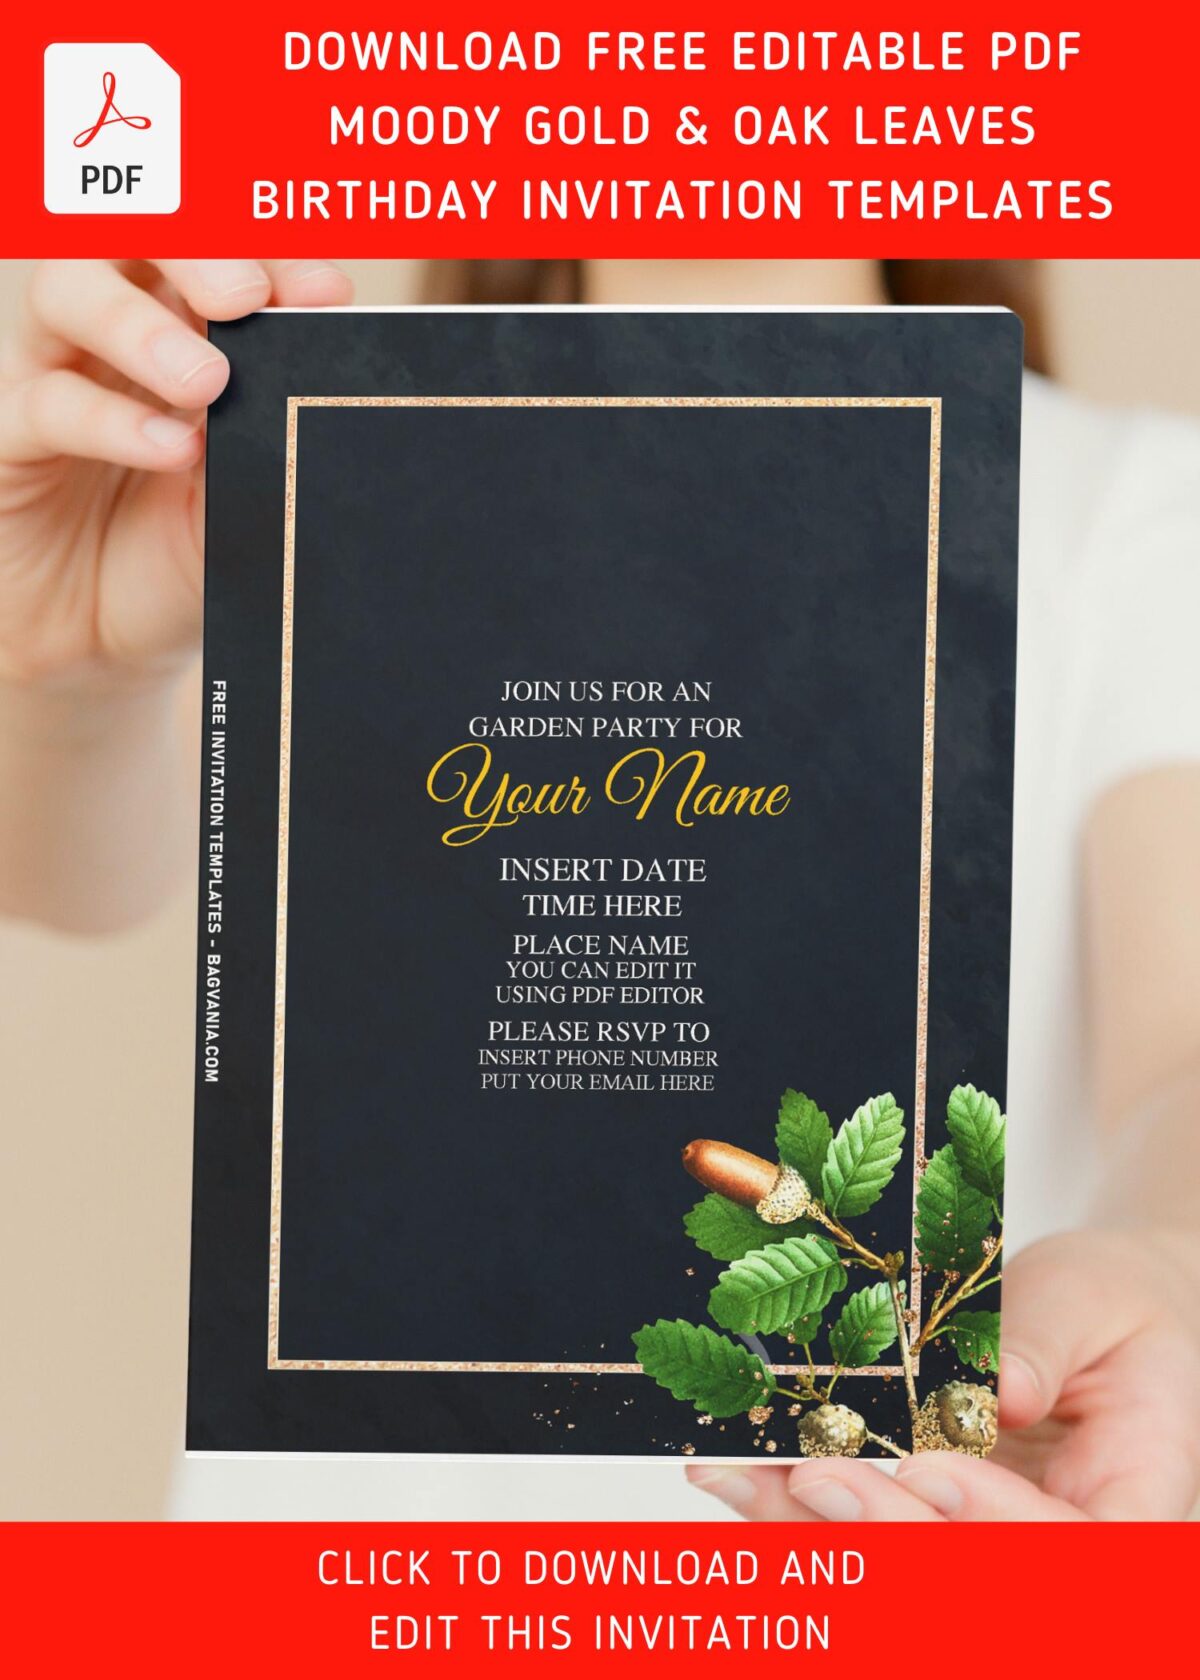 (Free Editable PDF) Moody Winter Gold & Oak Leaves Birthday Invitation Templates with 